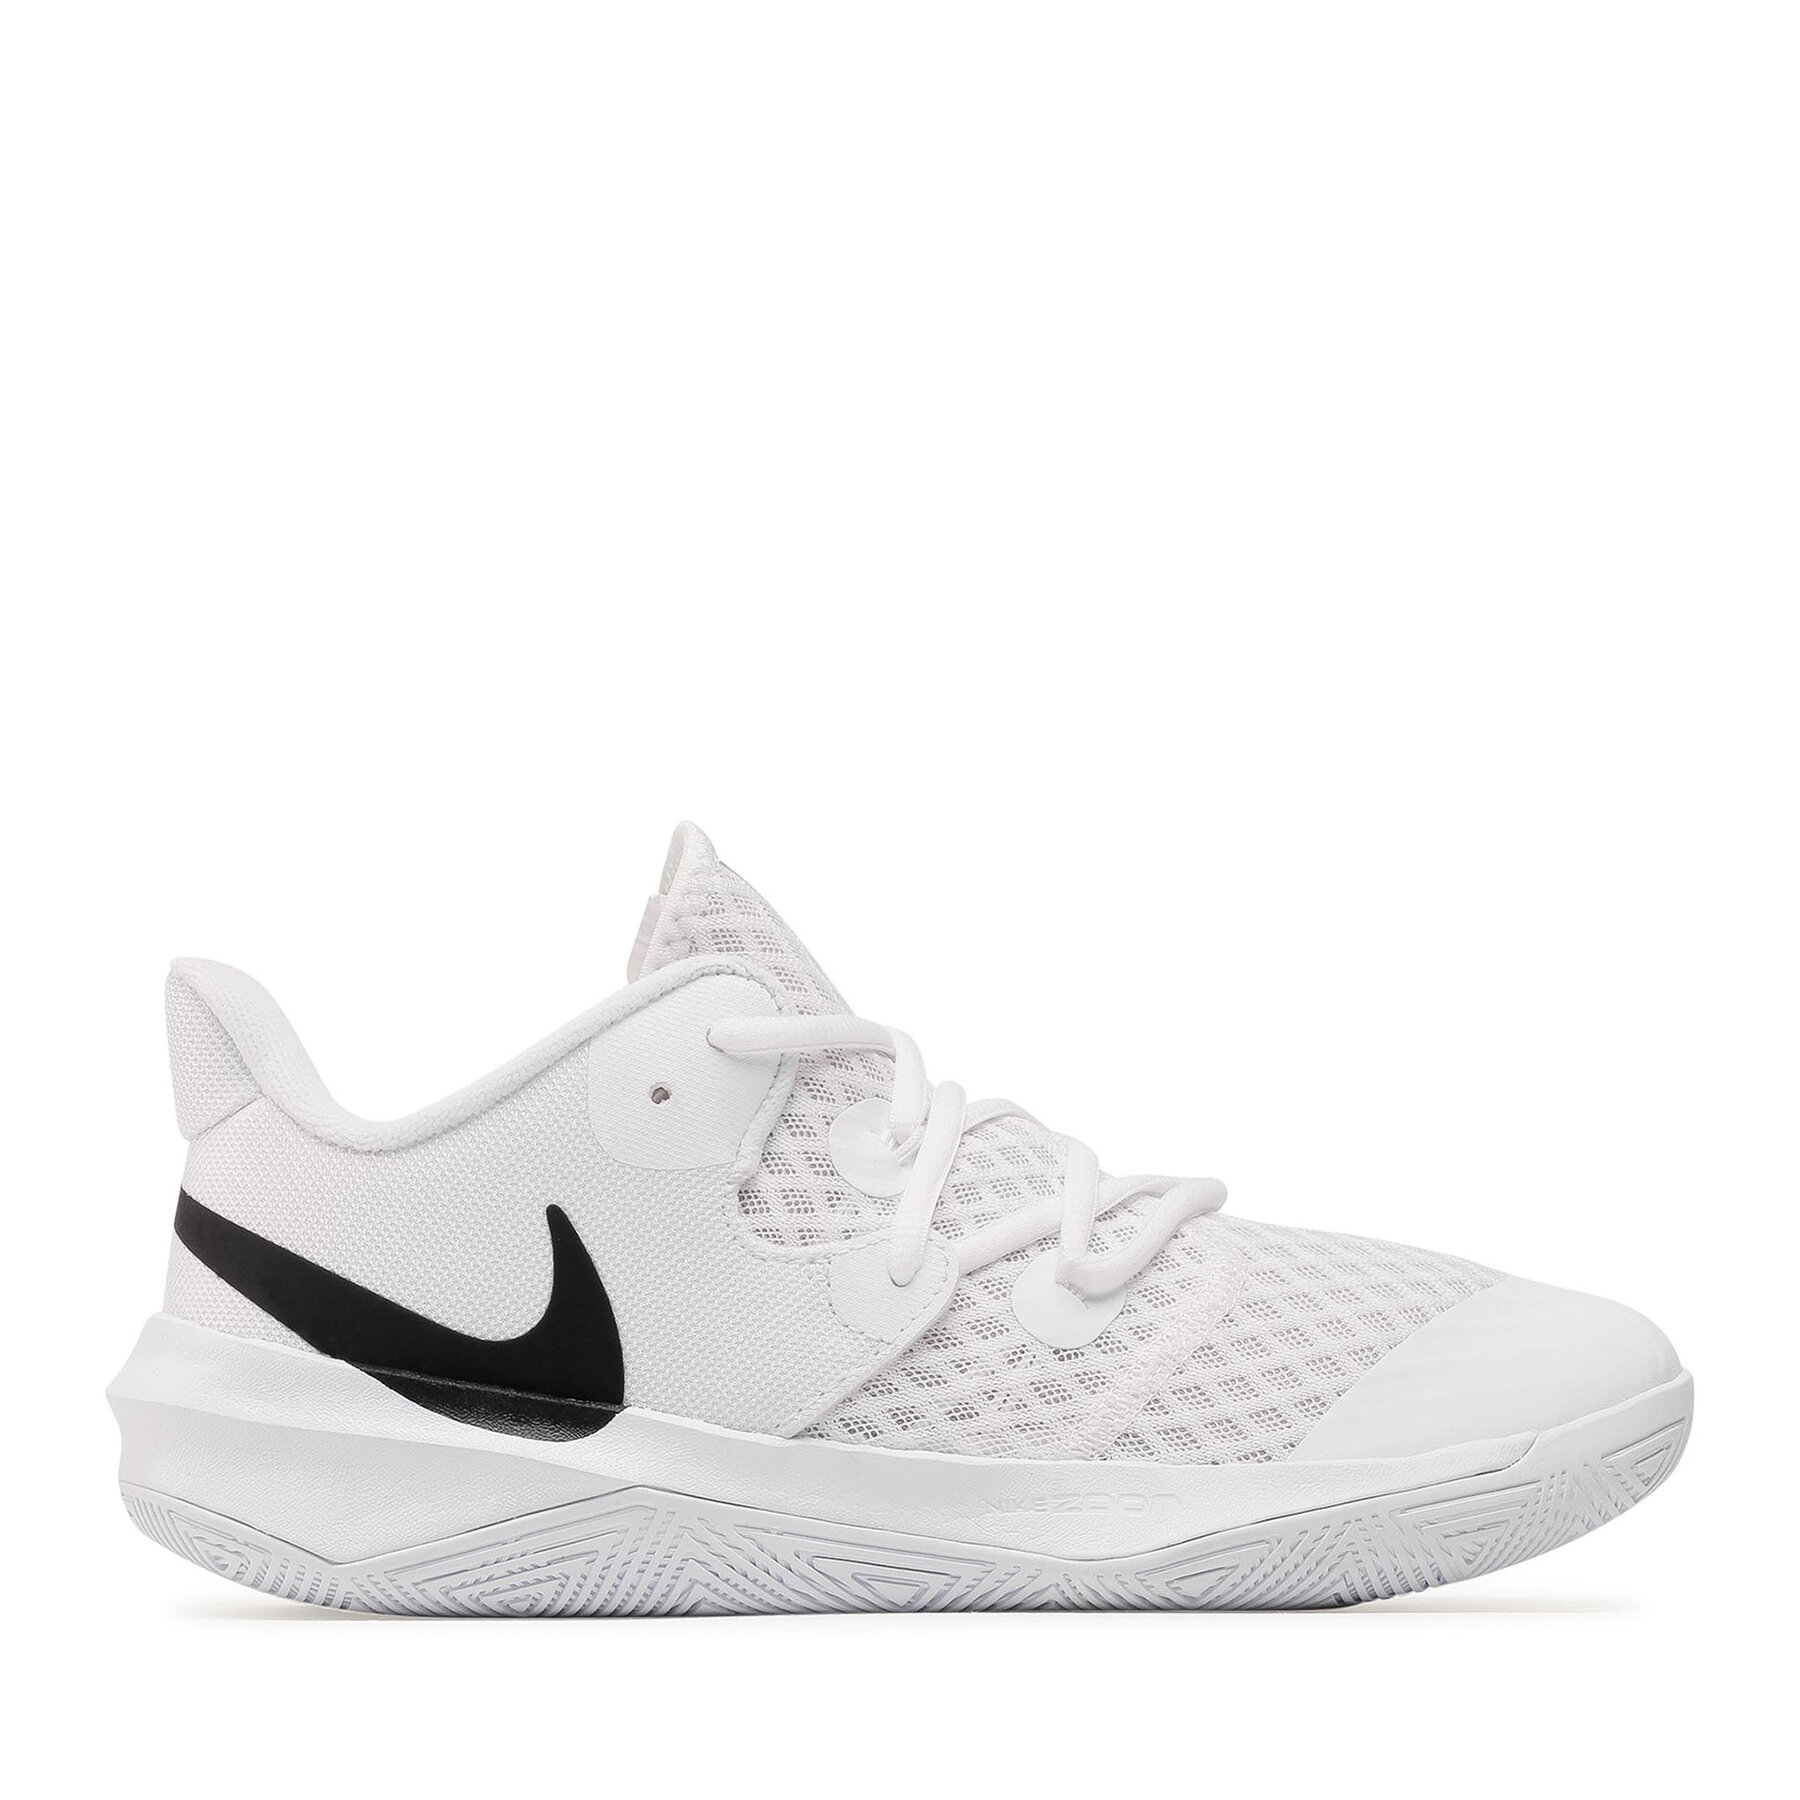 Comprar en oferta Nike Zoom Hyperspeed Court Handball Shoes white